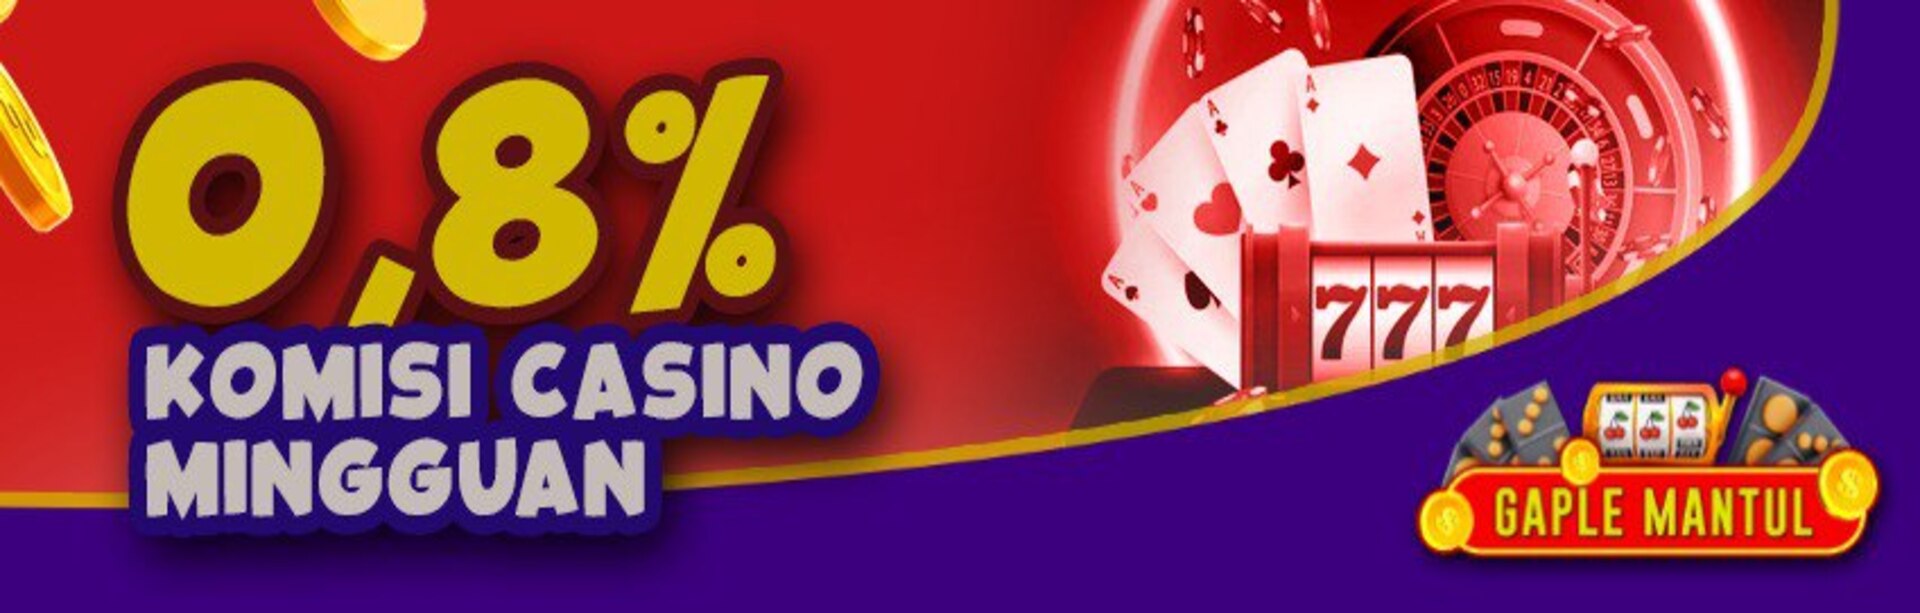 Komisi Casino Mingguan 0.8%